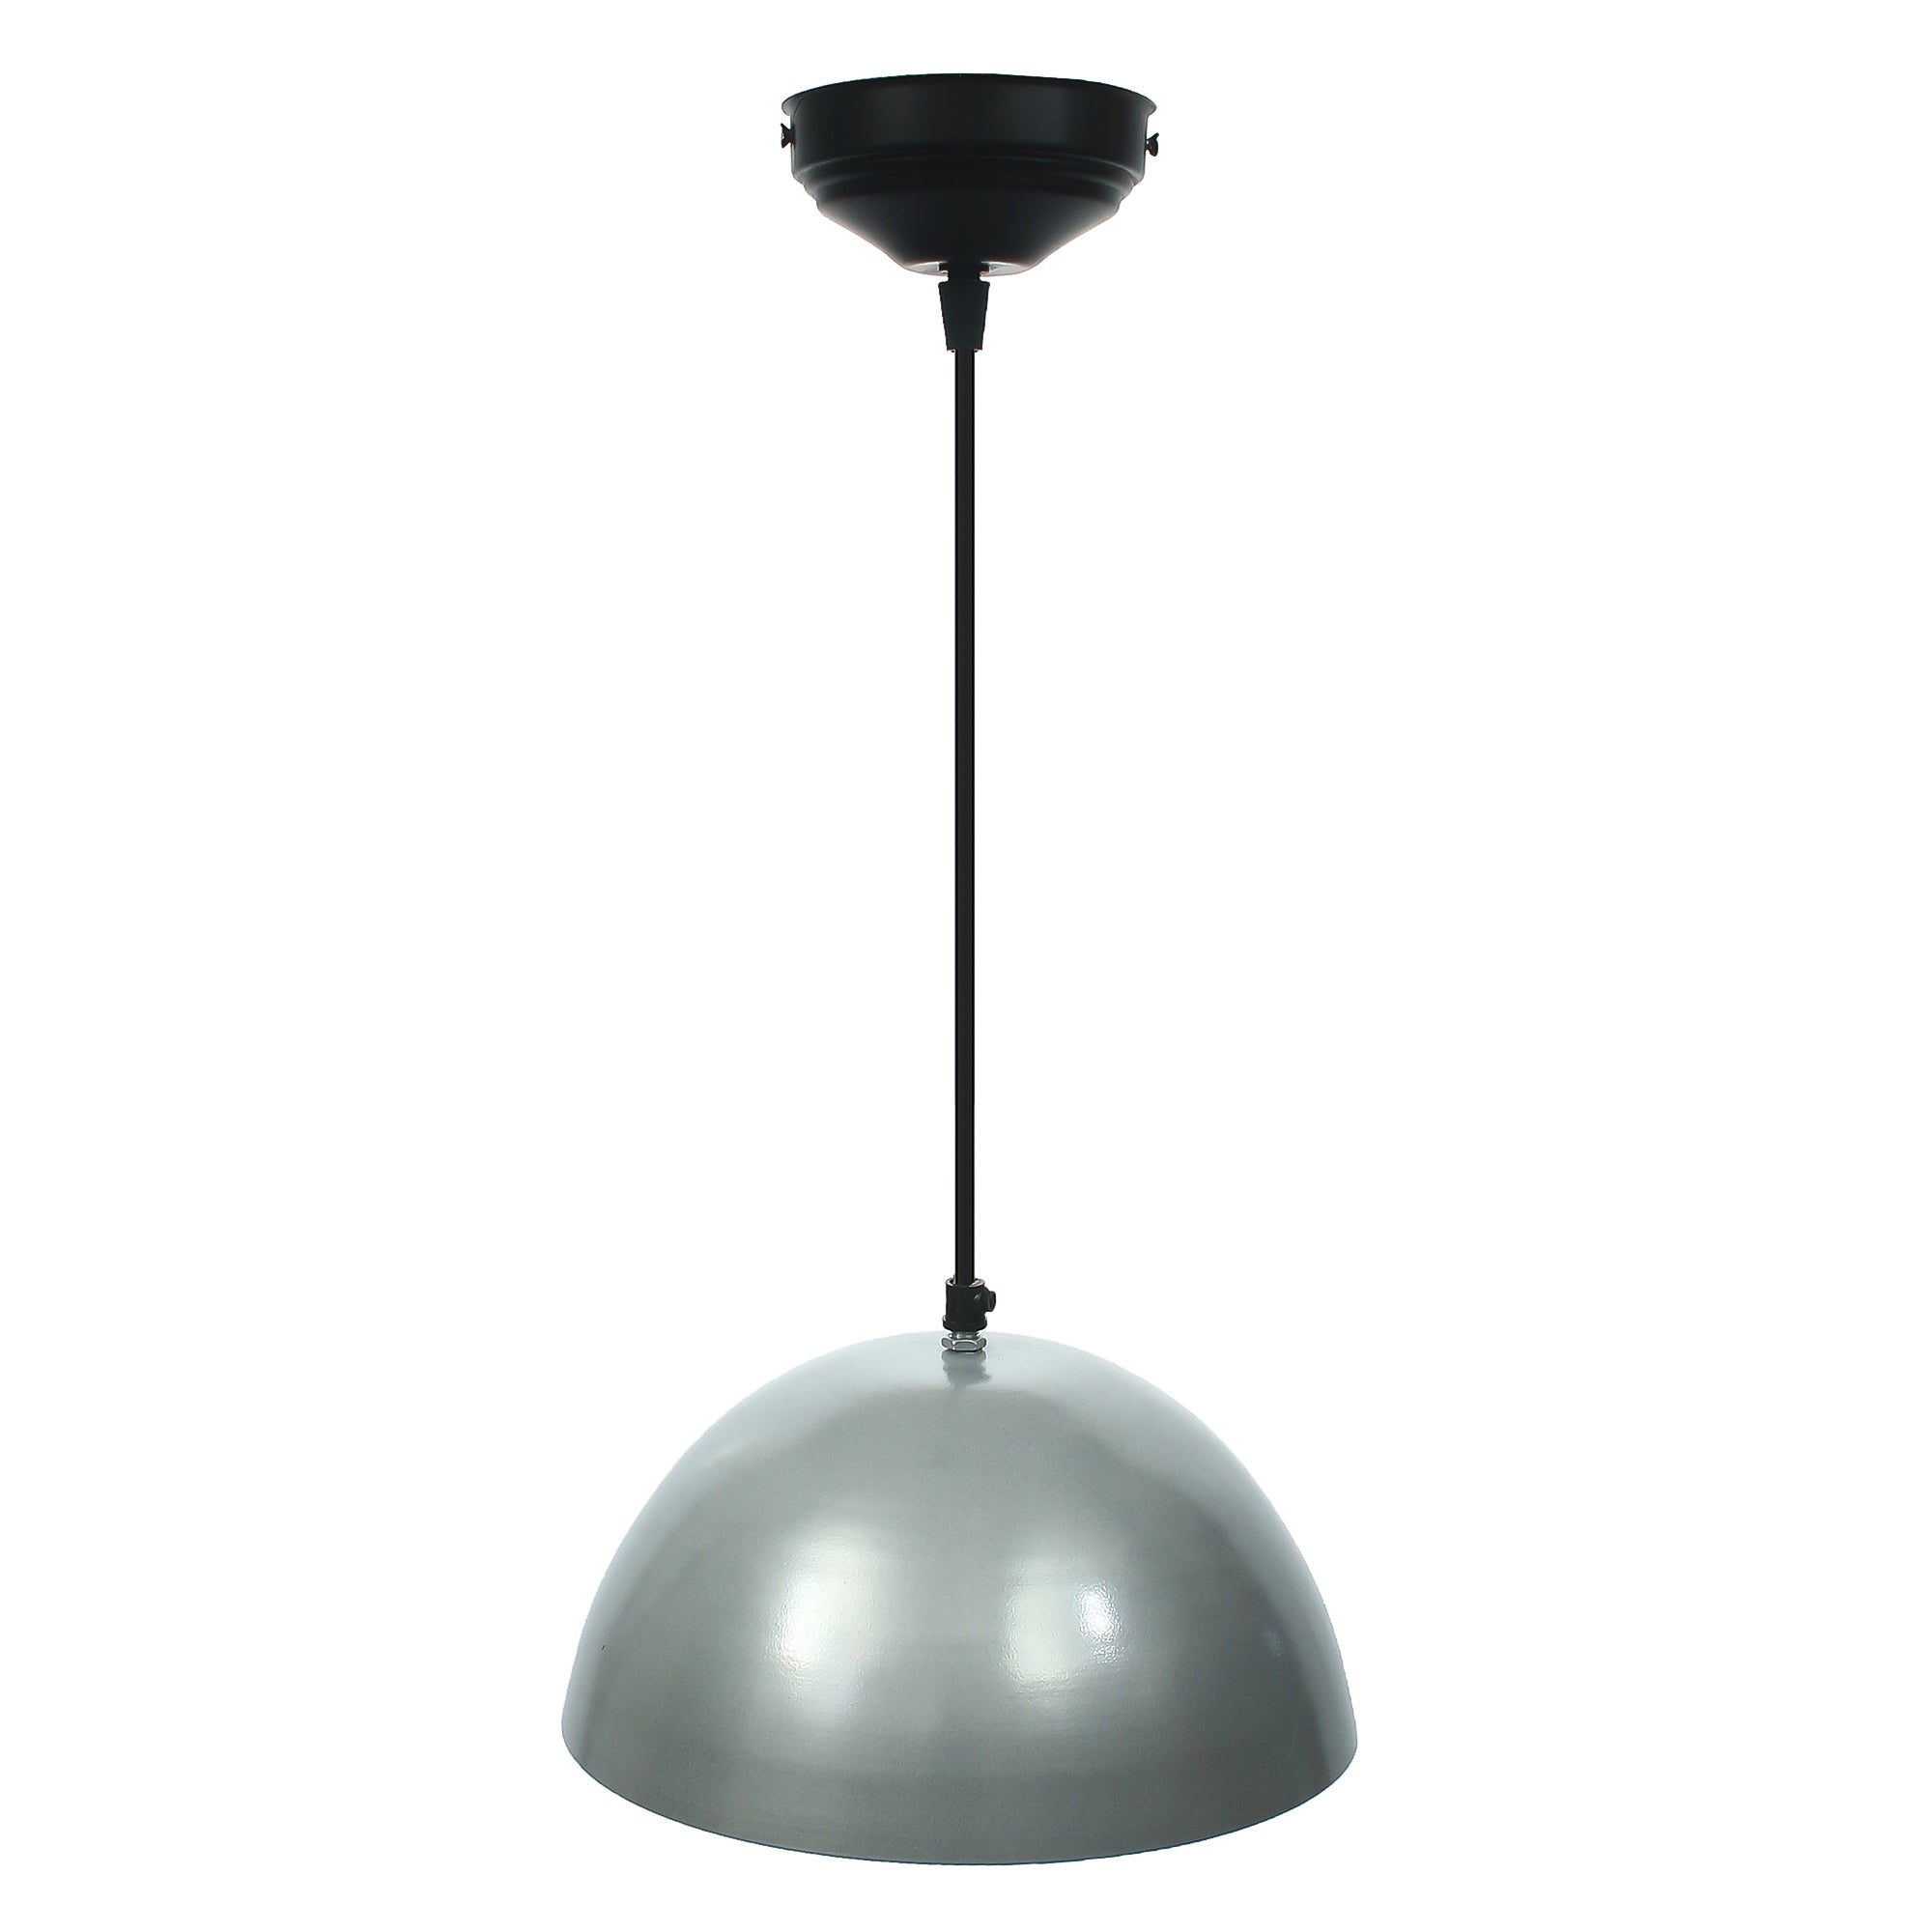 Shining Silver Glossy Finish Pendant Light, 10" Diameter Ceiling Hanging Lamp for Home/Living Room/Offices/Restaurants 4